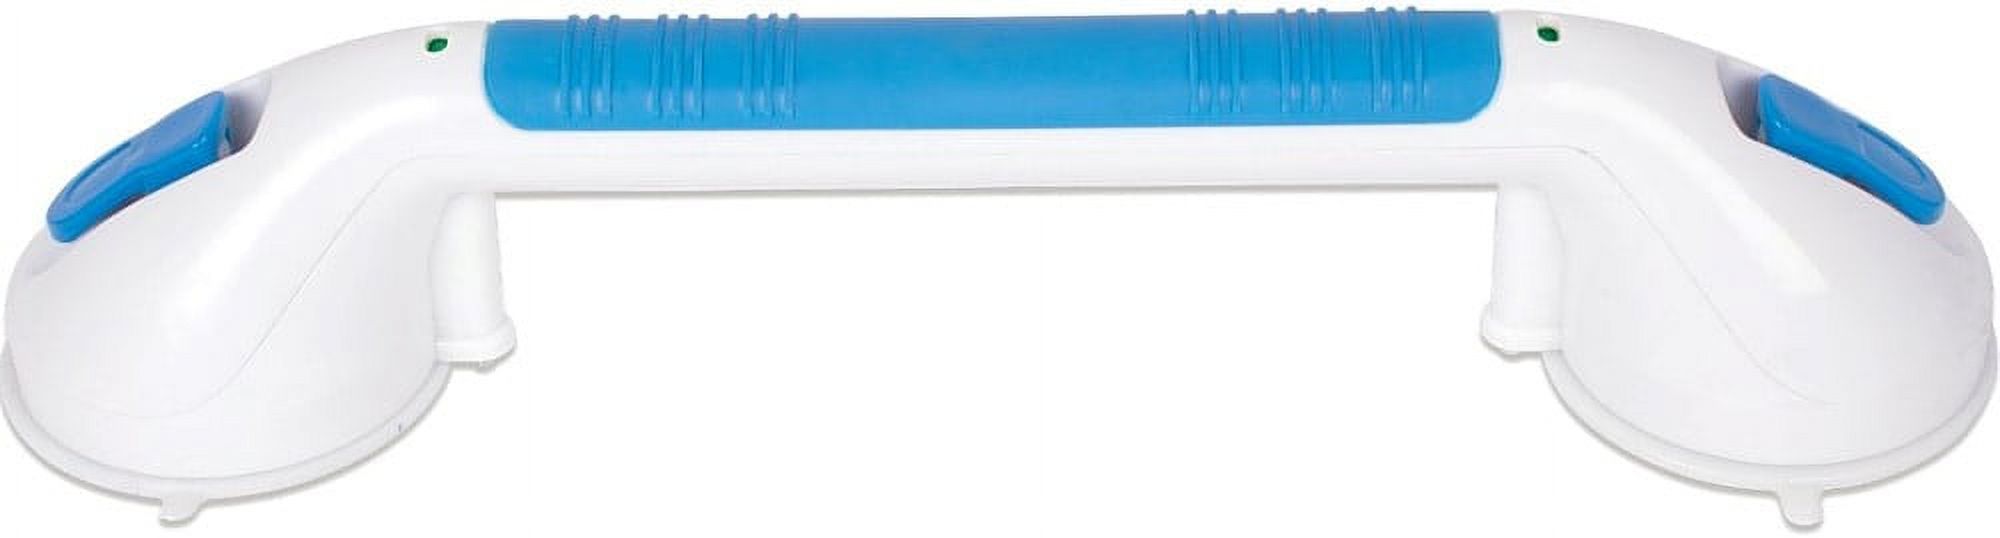 Carex Suction Shower Grab Bar, 16" Ultra Grip Handle, Dual Locking, 75 lb Weight Capacity - image 4 of 10